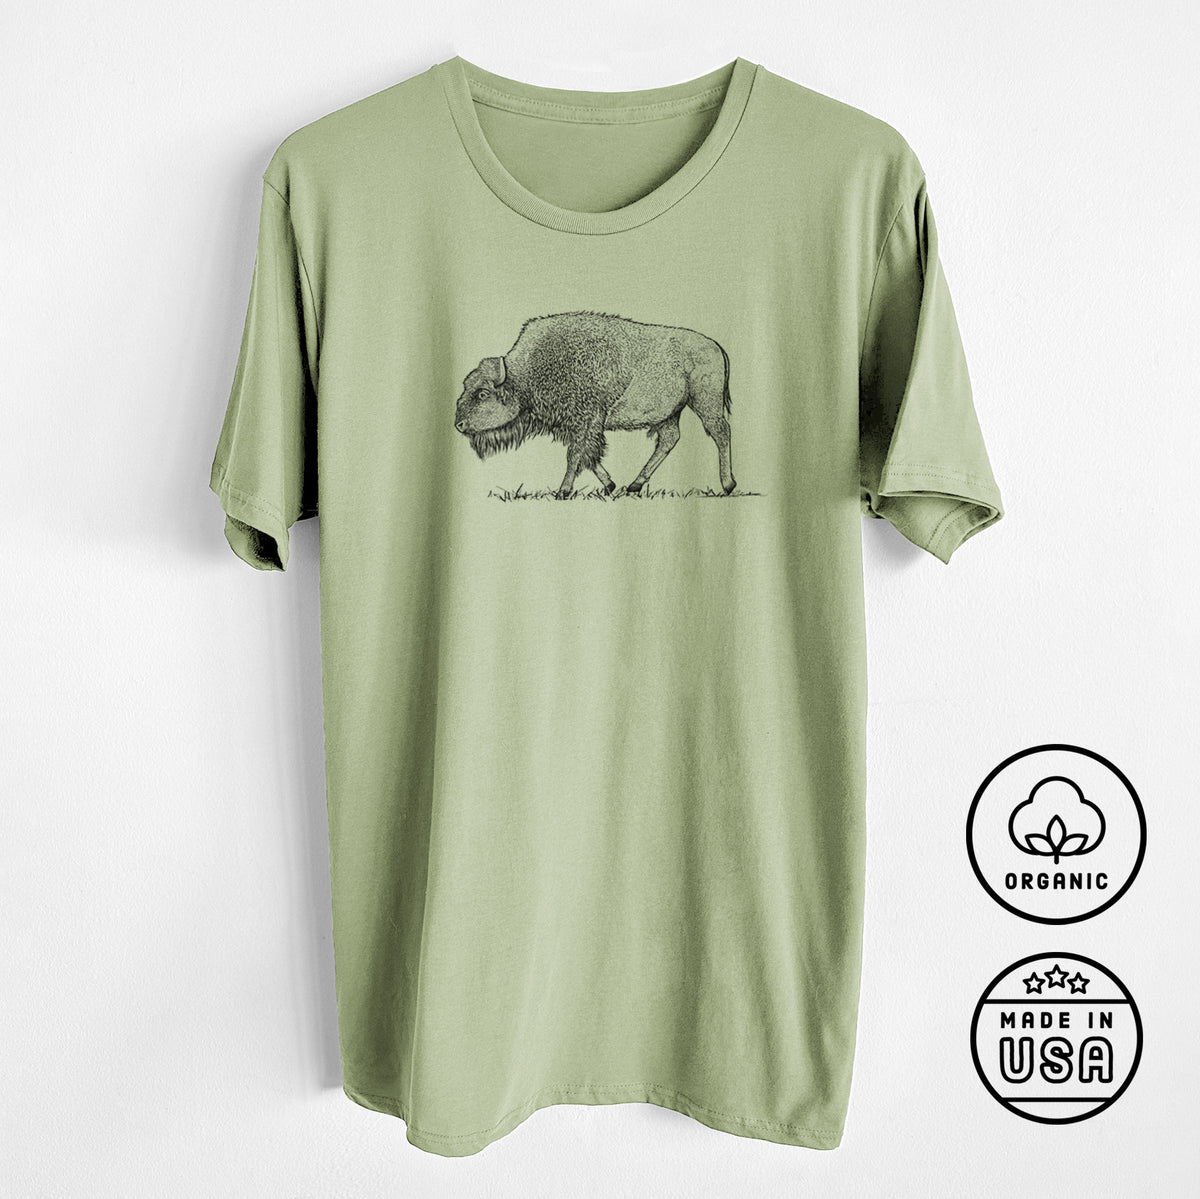 American Bison / Buffalo - Bison bison - Unisex Crewneck - Made in USA - 100% Organic Cotton